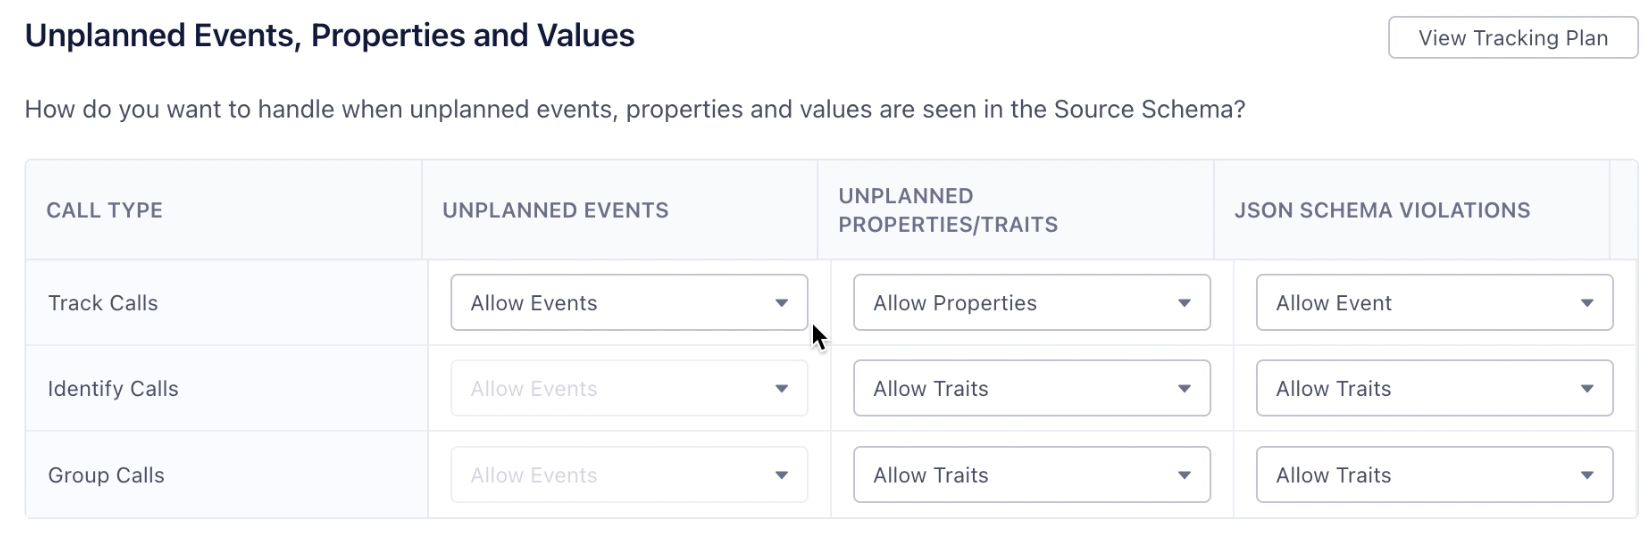 unplanned-events-properties-values